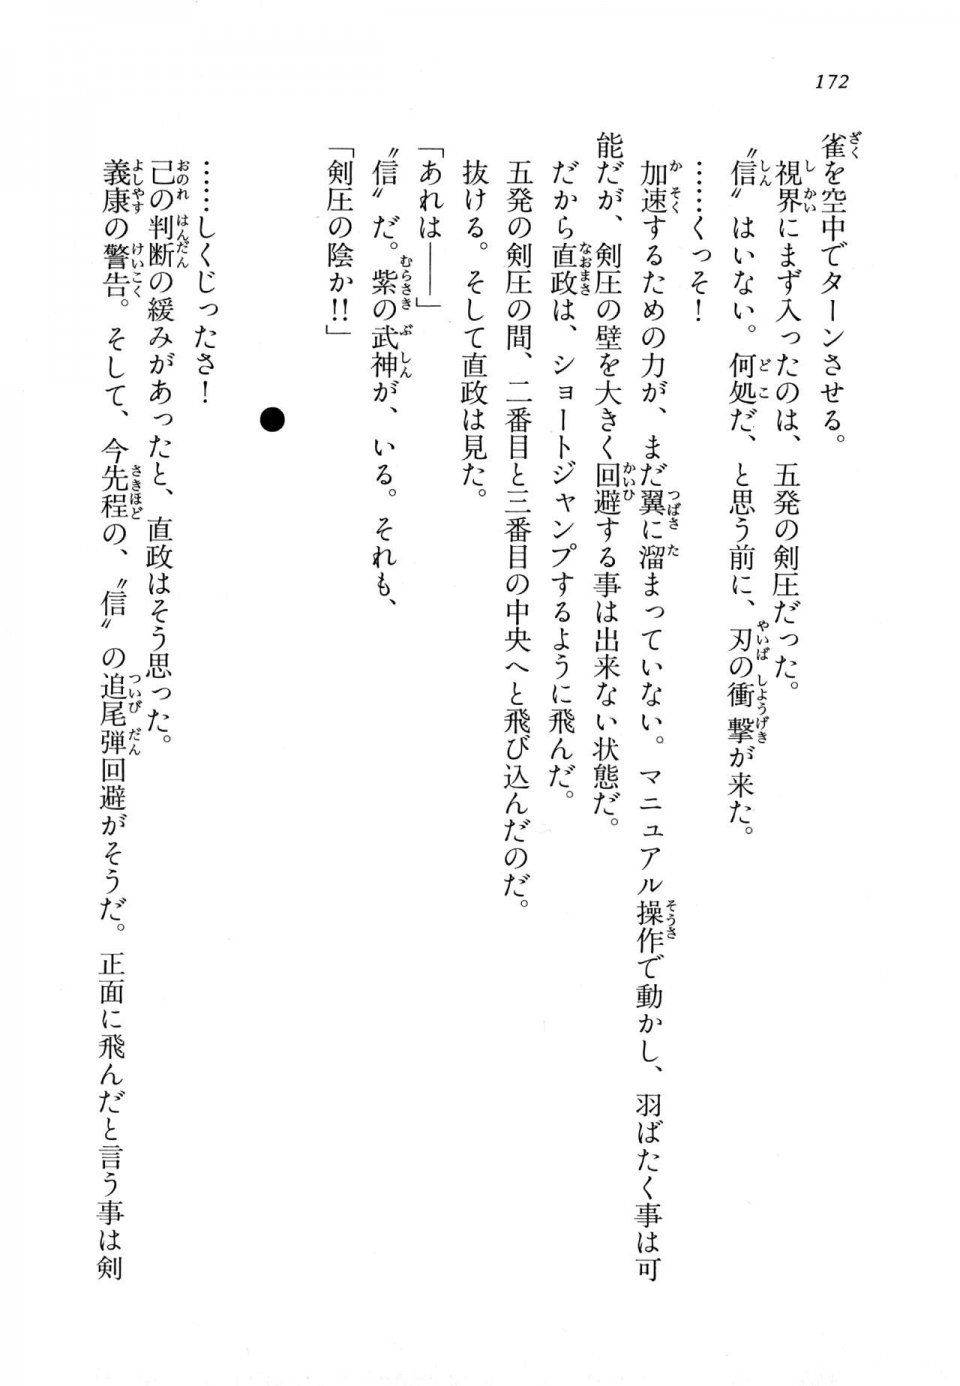 Kyoukai Senjou no Horizon LN Vol 18(7C) Part 1 - Photo #172